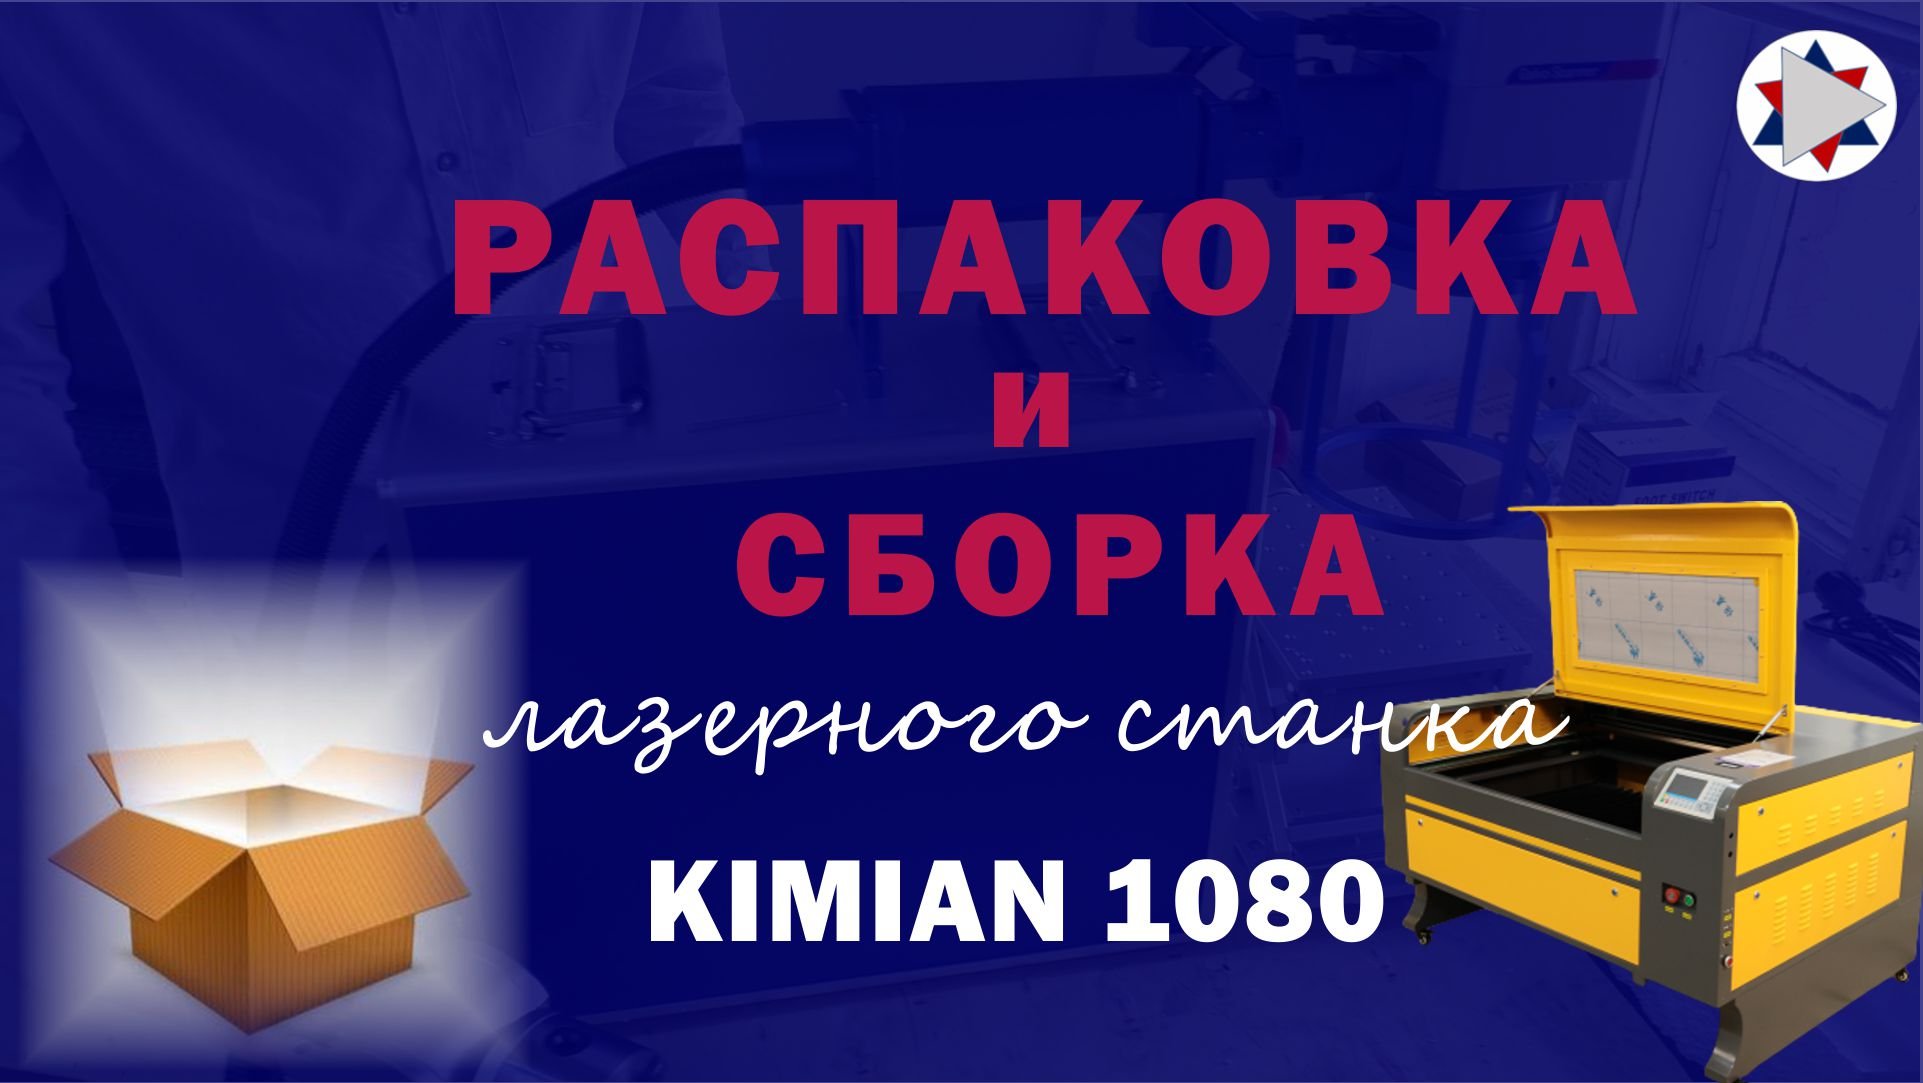 ✅ Распаковка и сборка лазерного станка Kimian 1080